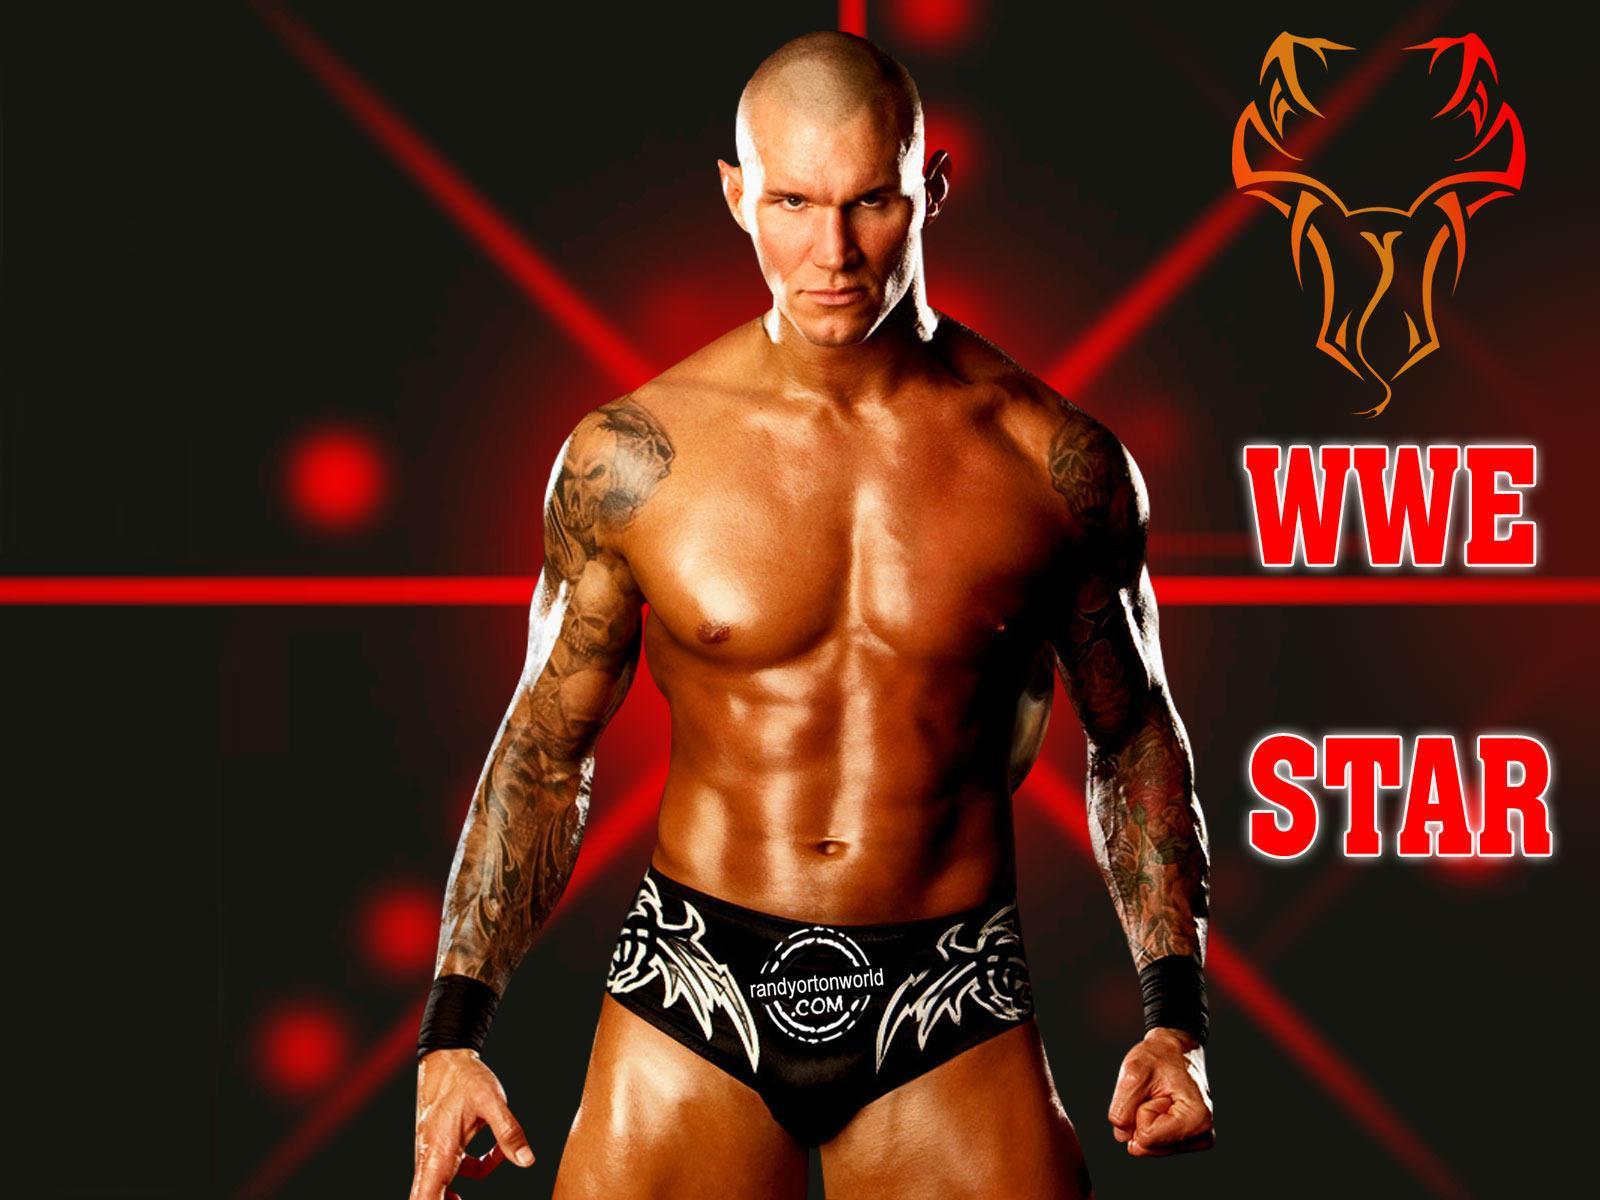 WWE Superstar Randy Orton wallpaper. WORLD WRESTLING